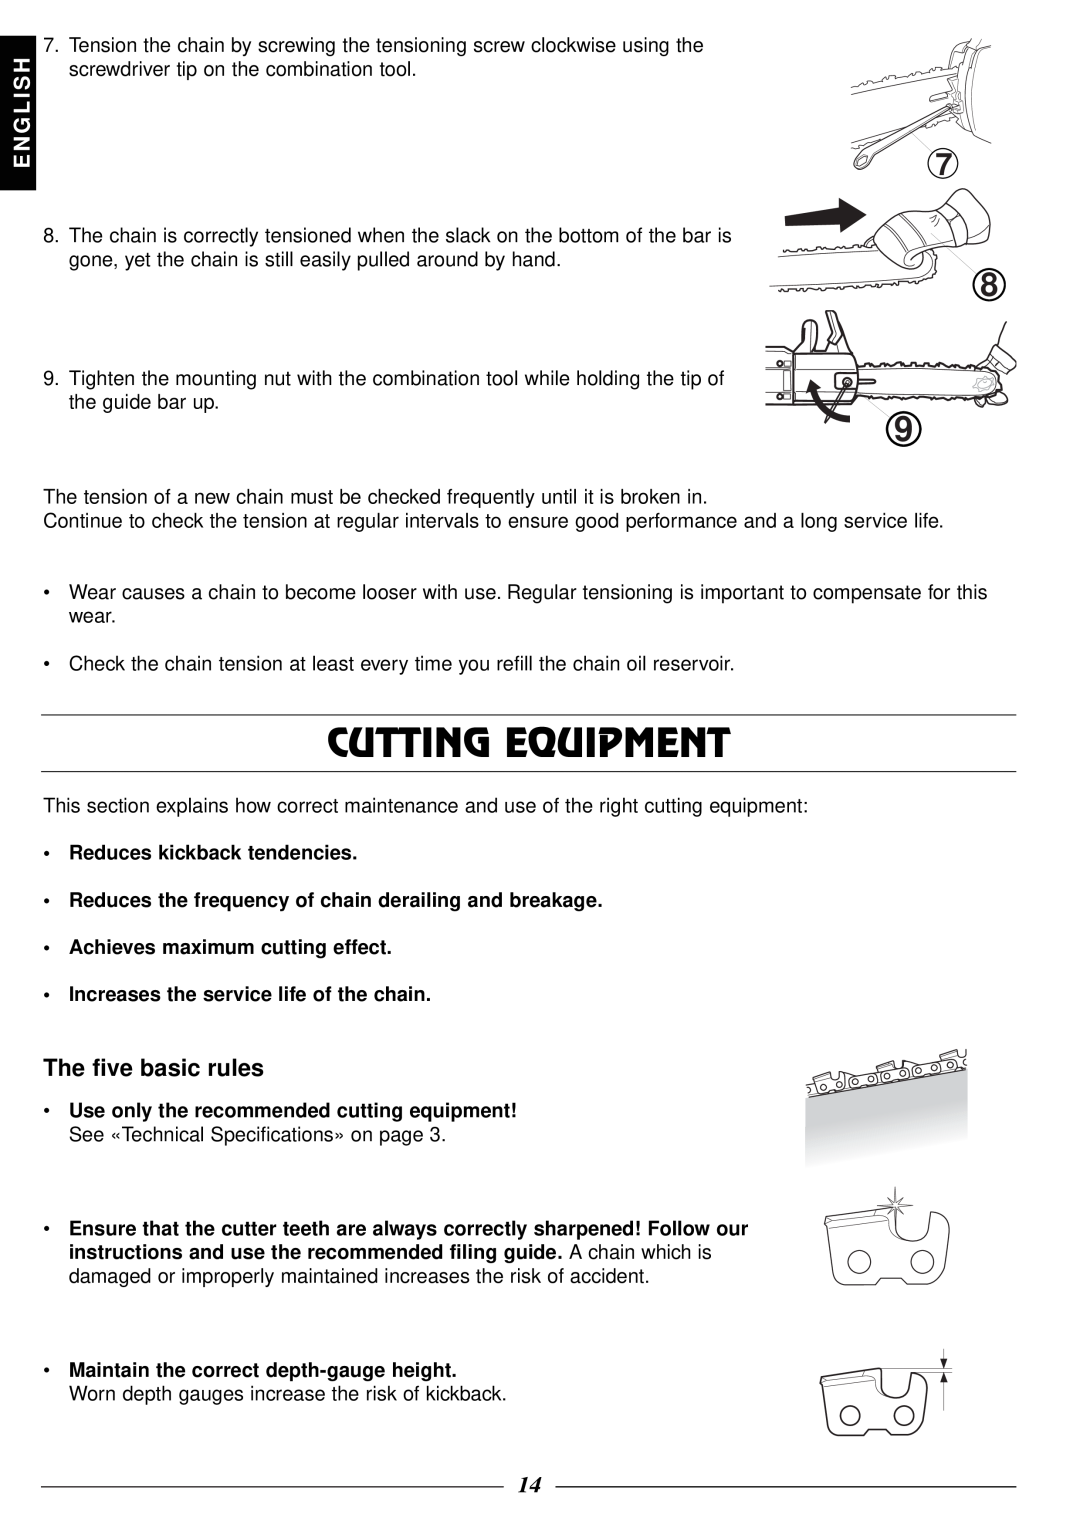 Husqvarna 315, 318 Cutting Equipment, The five basic rules, Reduces kickback tendencies, Achieves maximum cutting effect 